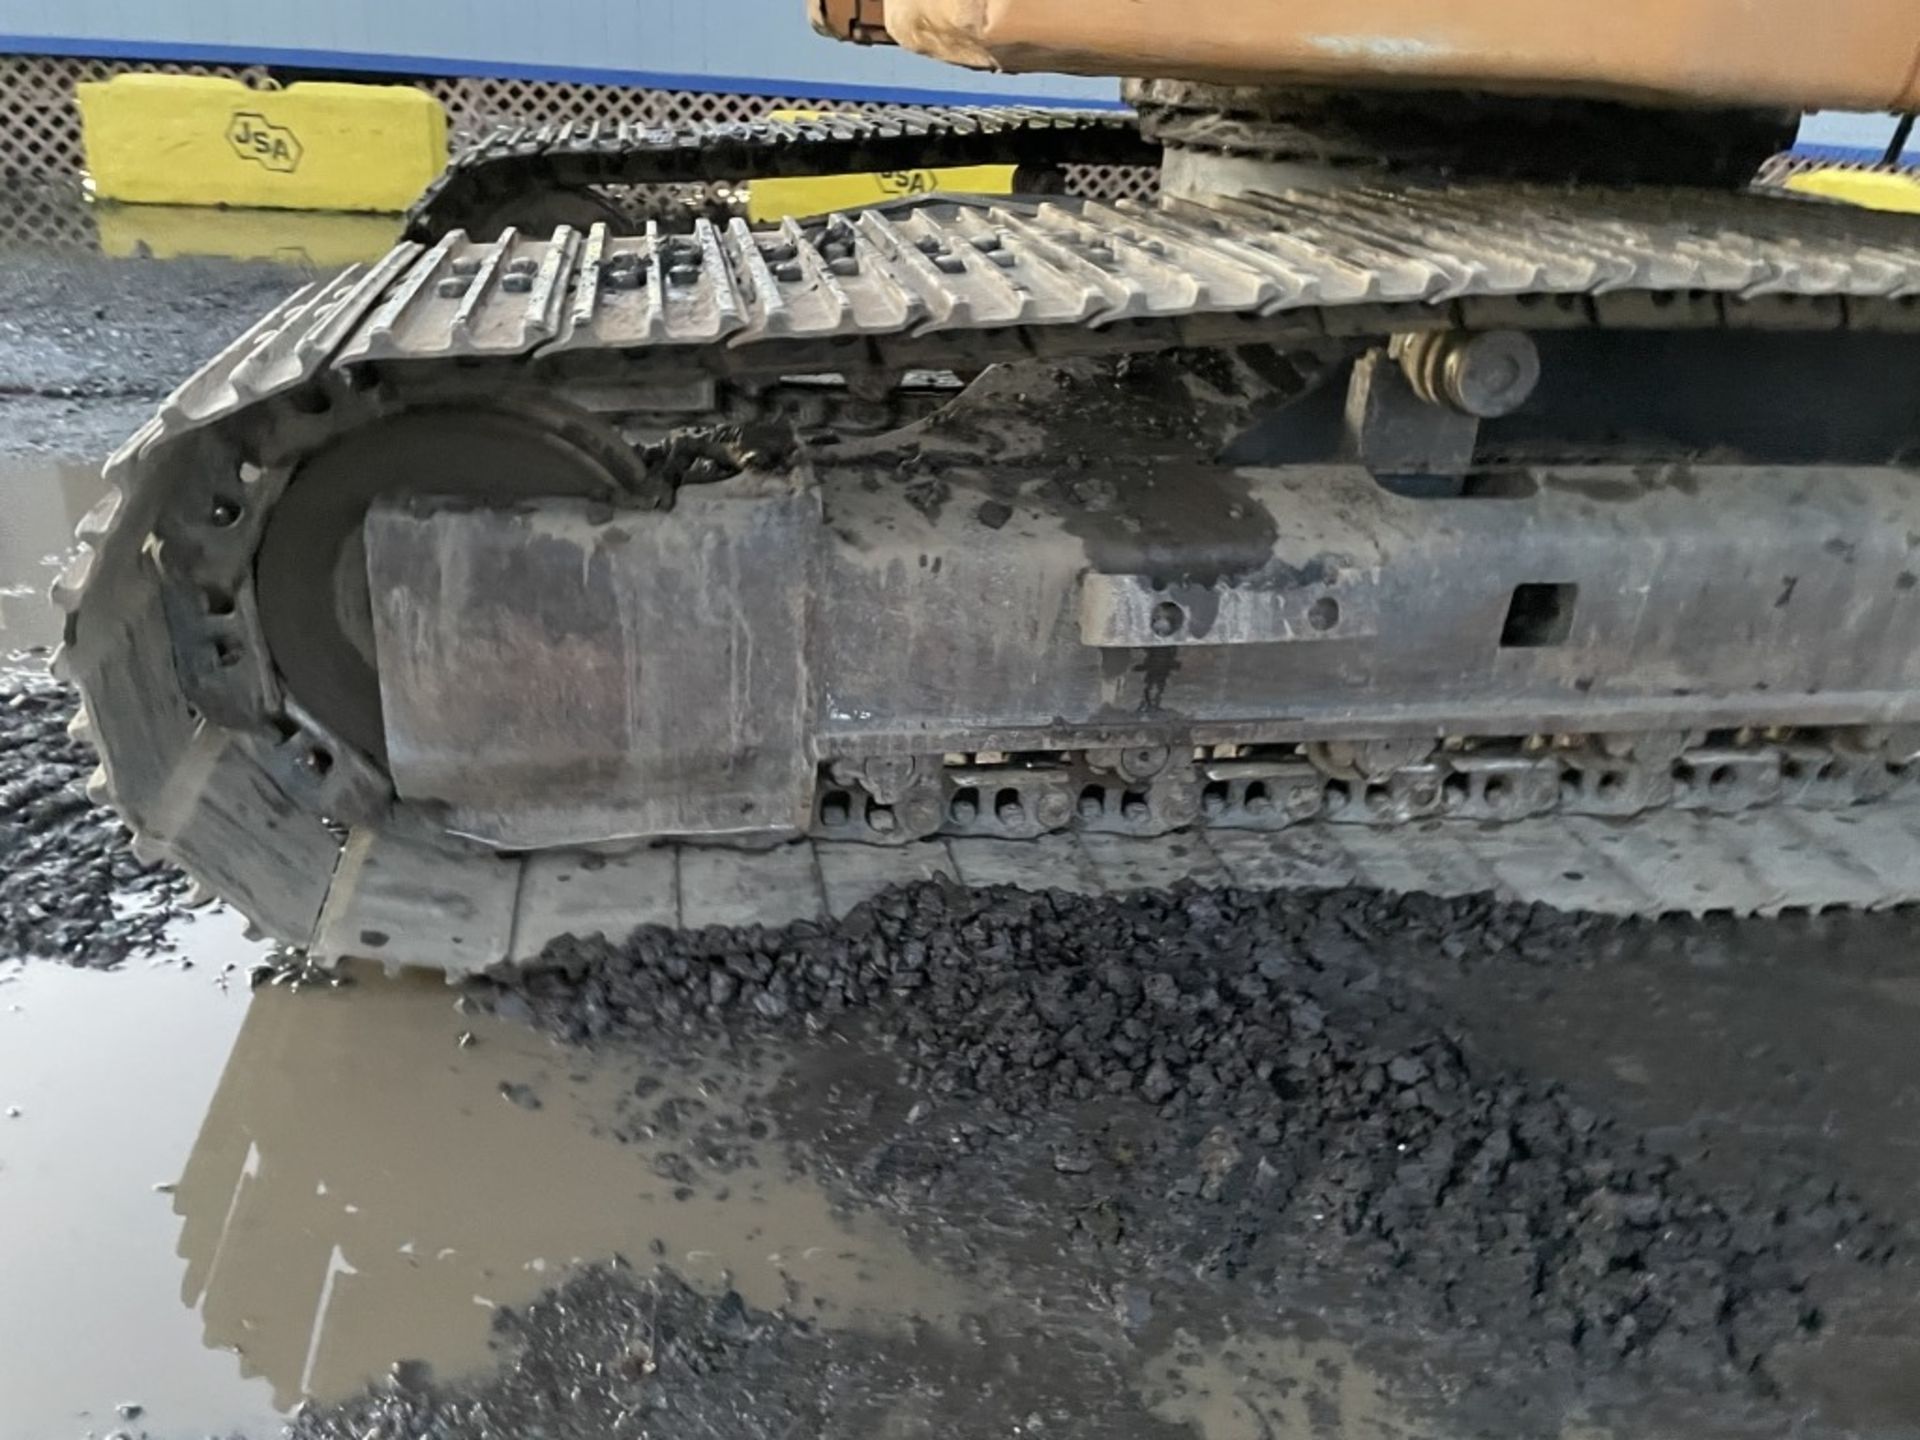 Case CX225 SR Hydraulic Excavator - Image 15 of 28